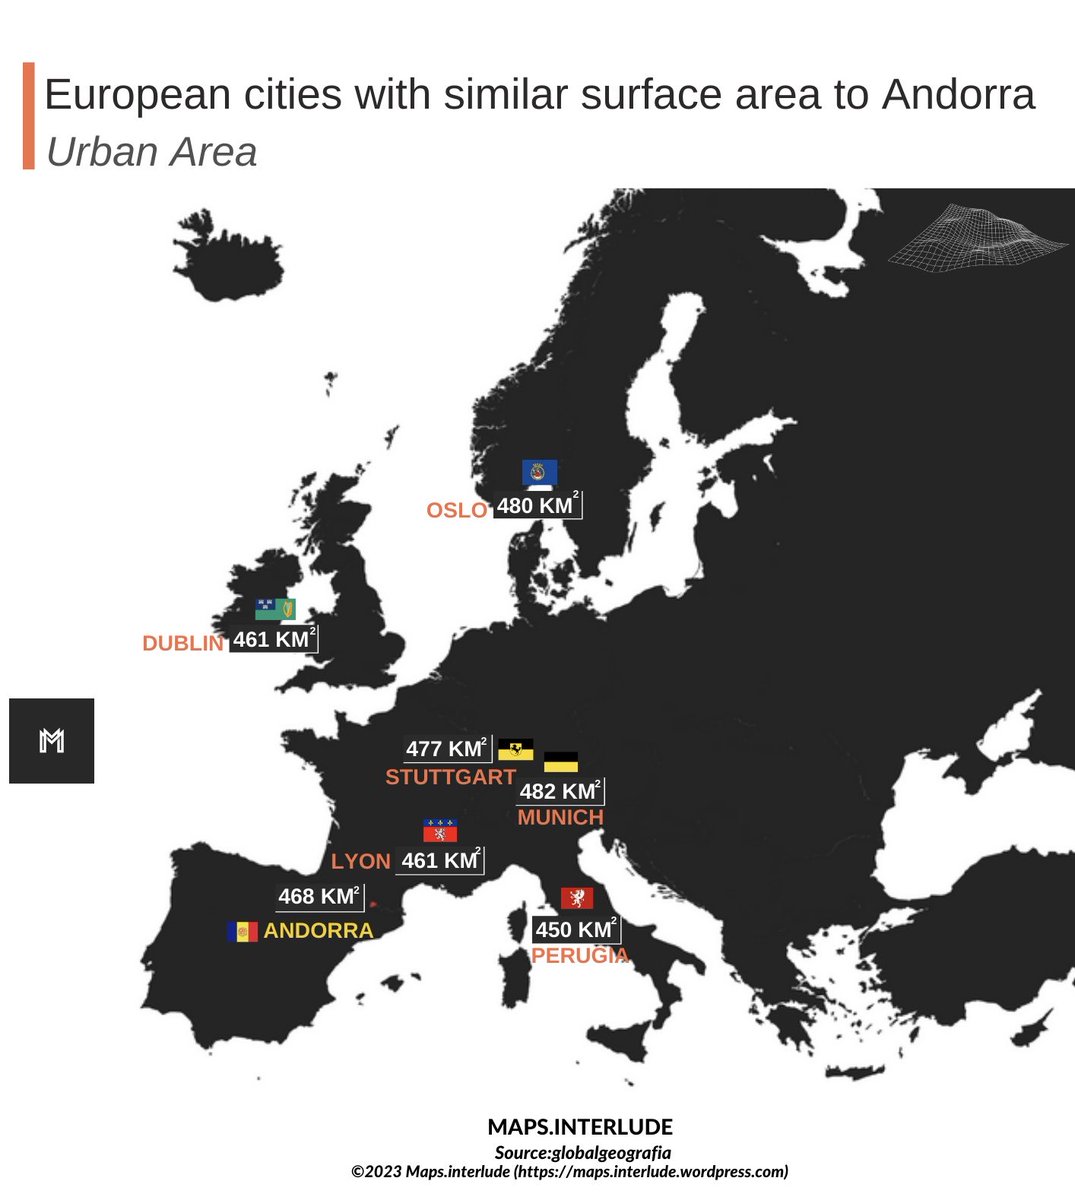 #European cities with similar surface area to #Andorra ( #urbanarea )